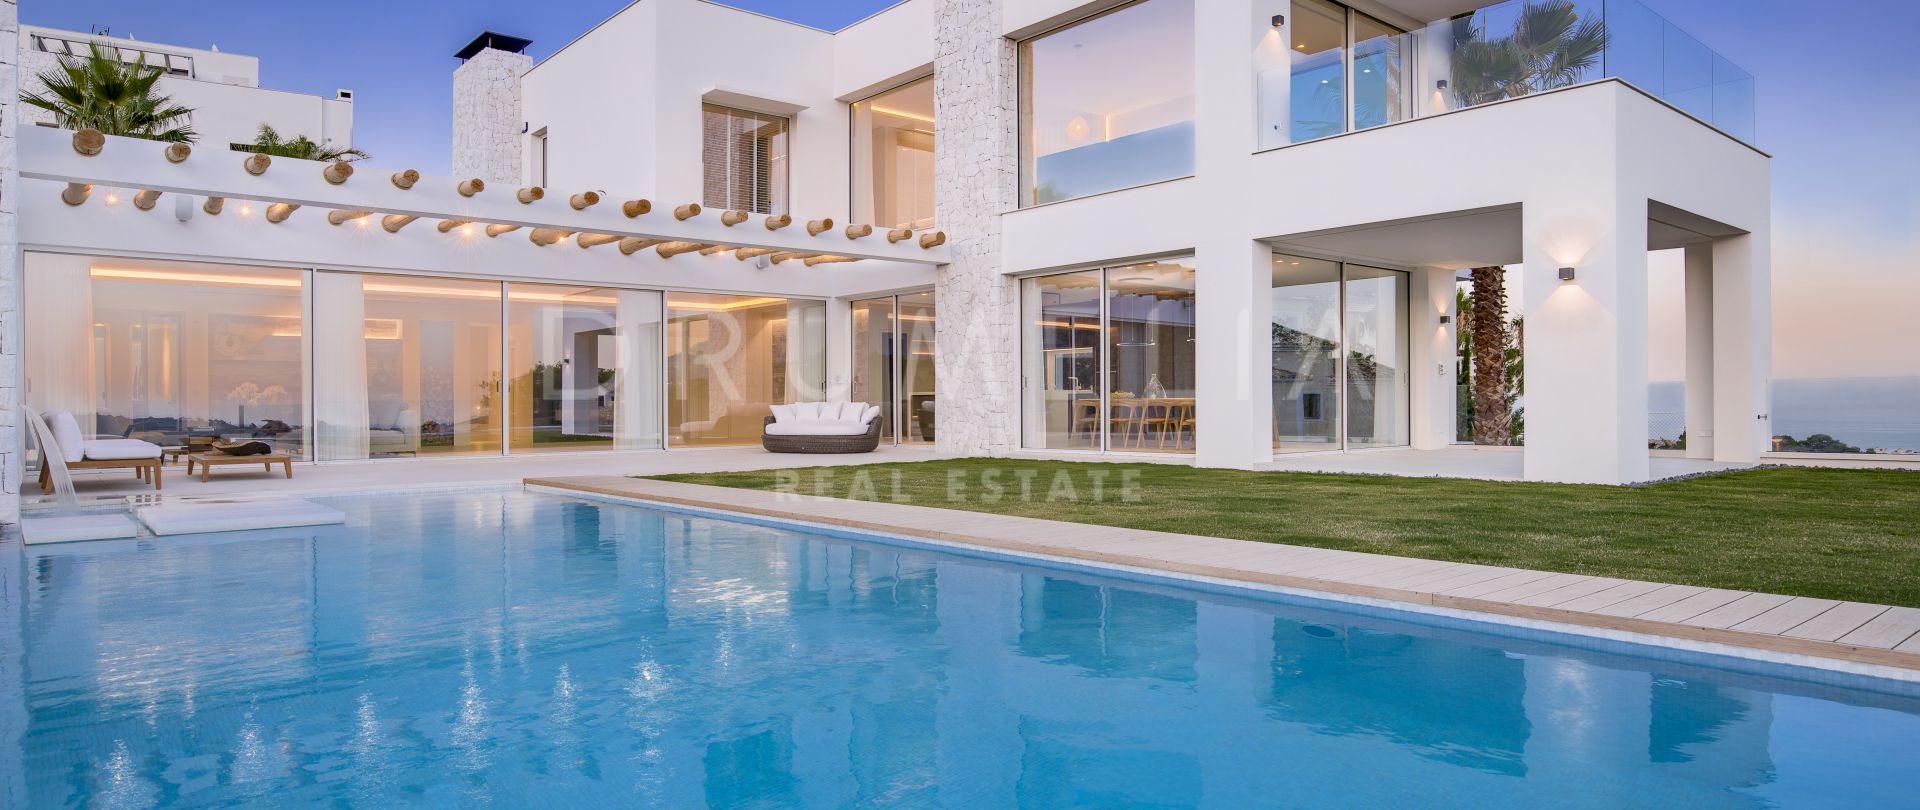 Brand-New Stunning Eco-friendly Luxury Villa in Selwo, Estepona